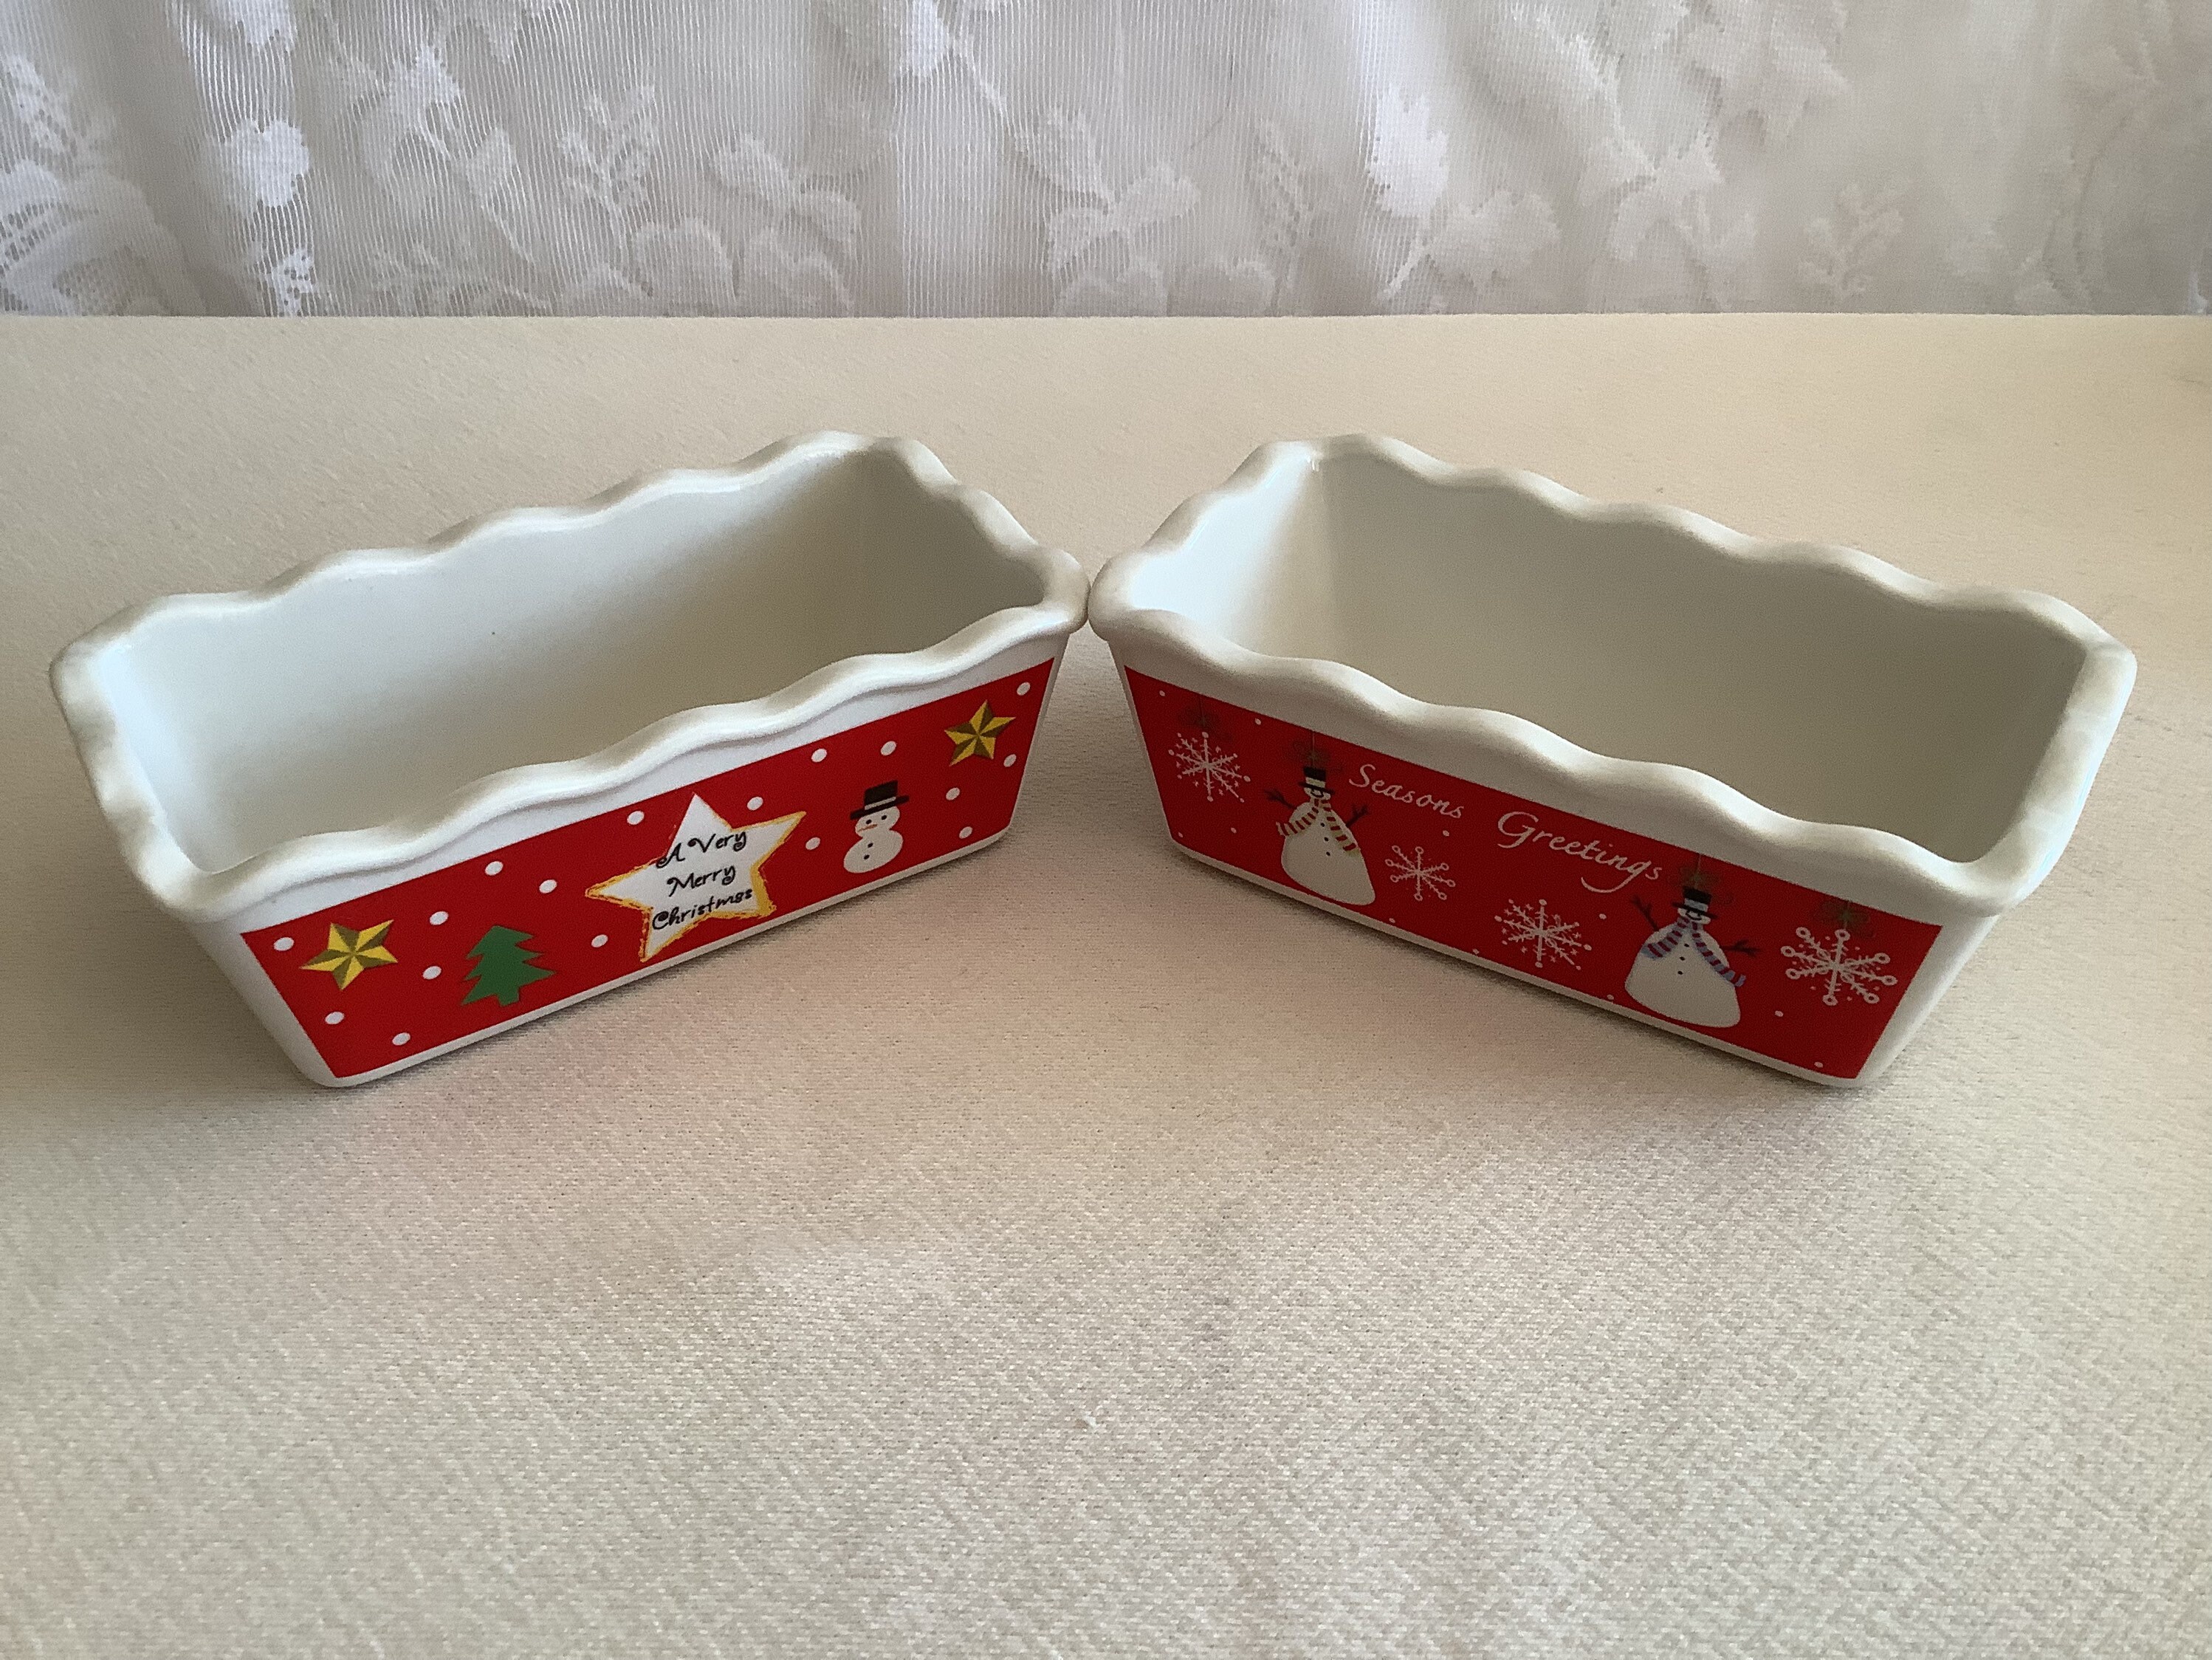 Merry Ceramic Mini Loaf Pan by Celebrate It®